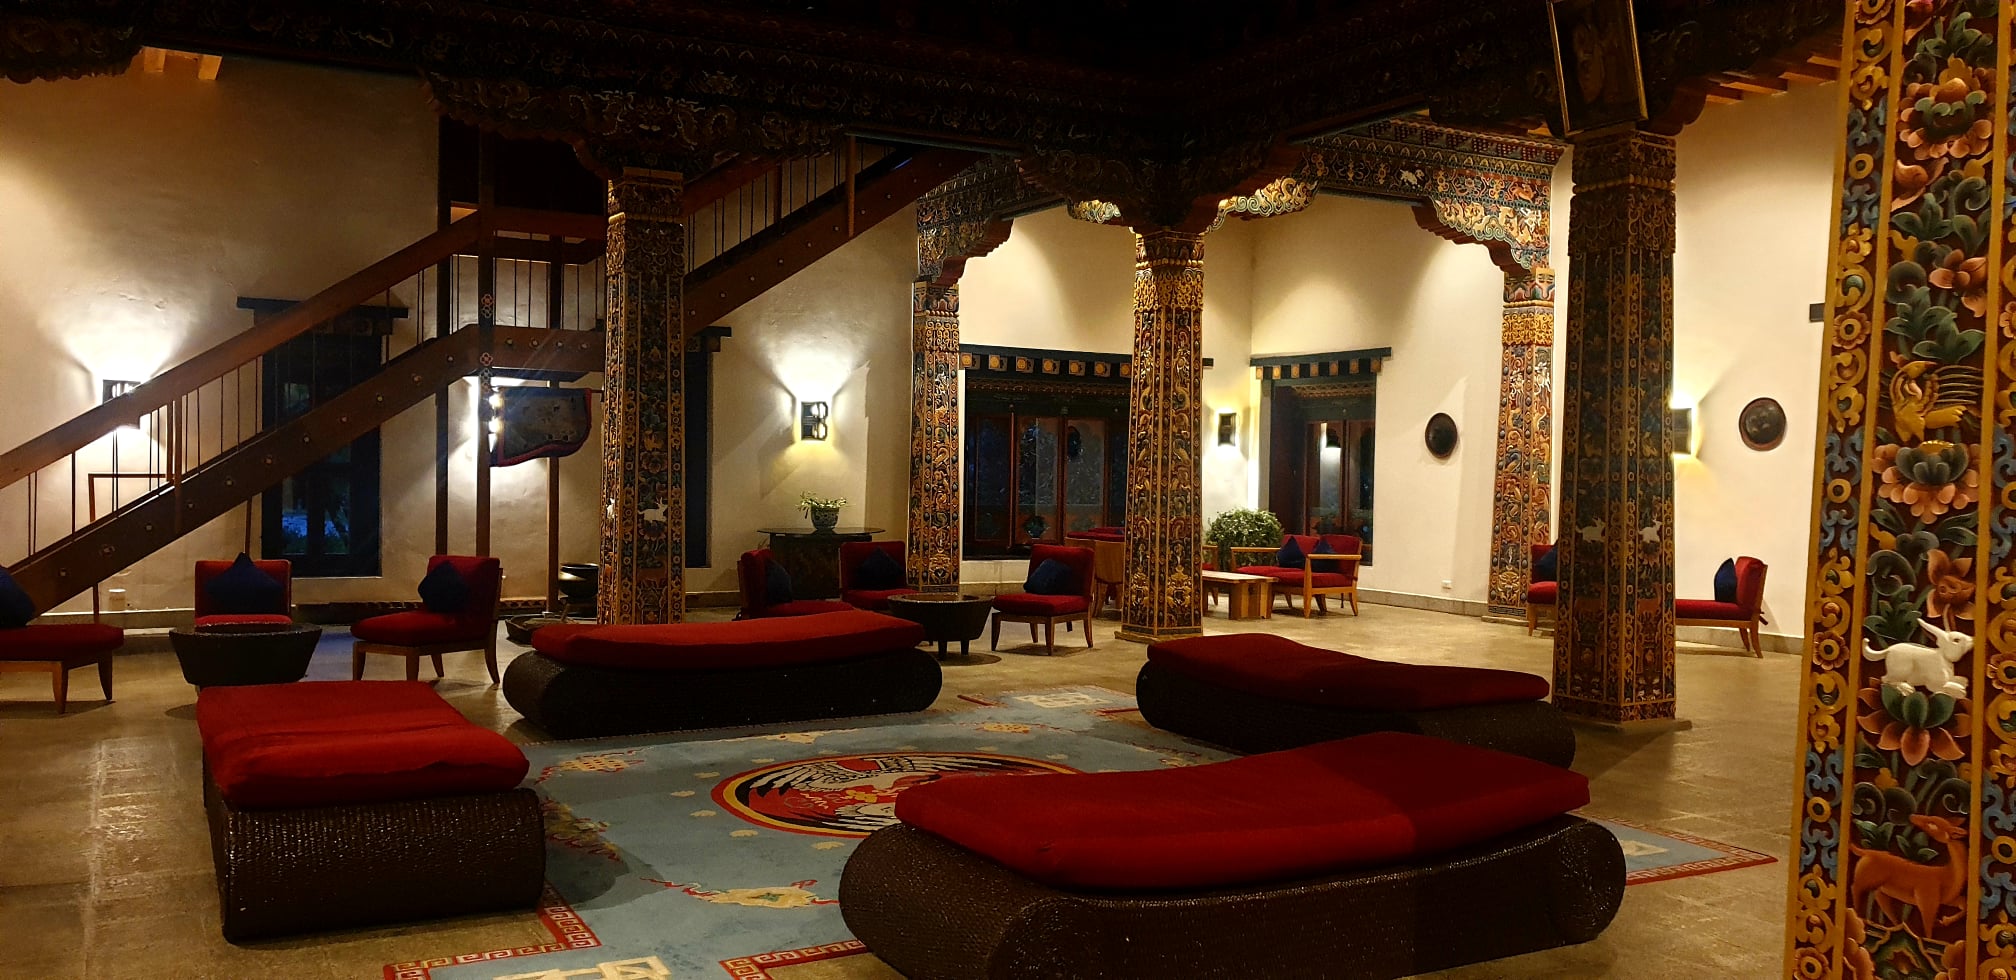 zhiwaling hotel in Paro